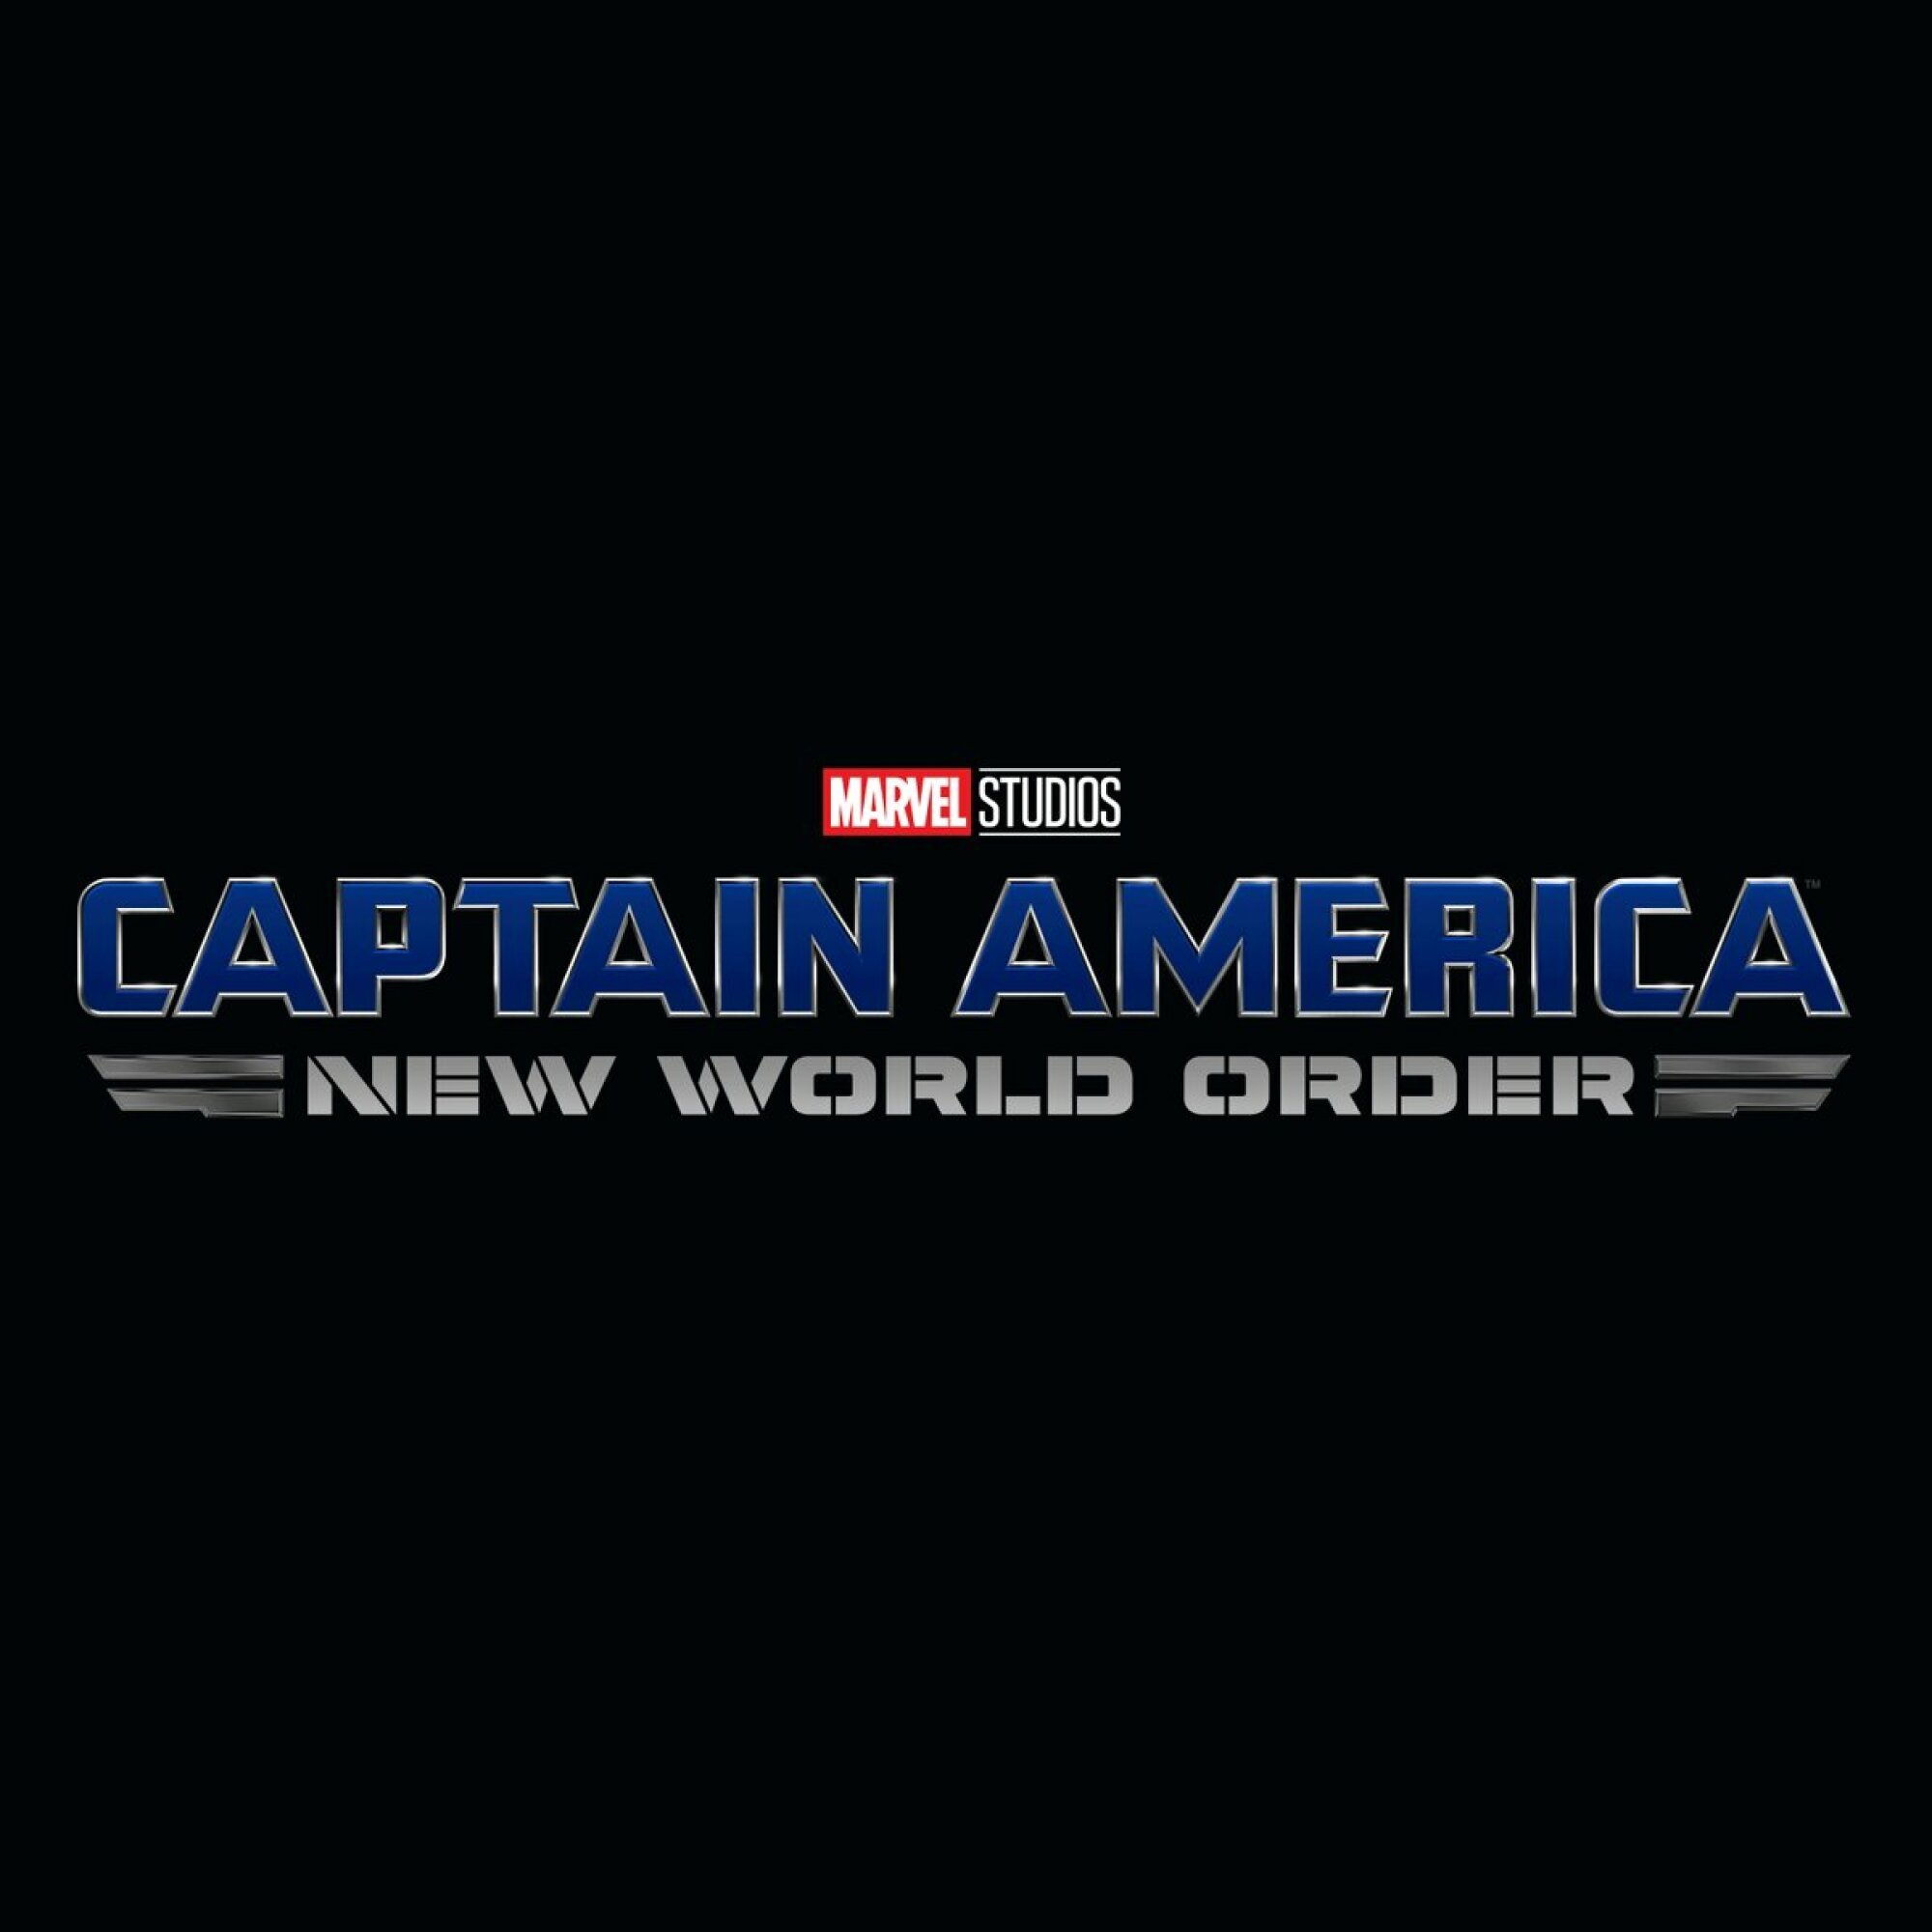 Captain America 4 titlecard